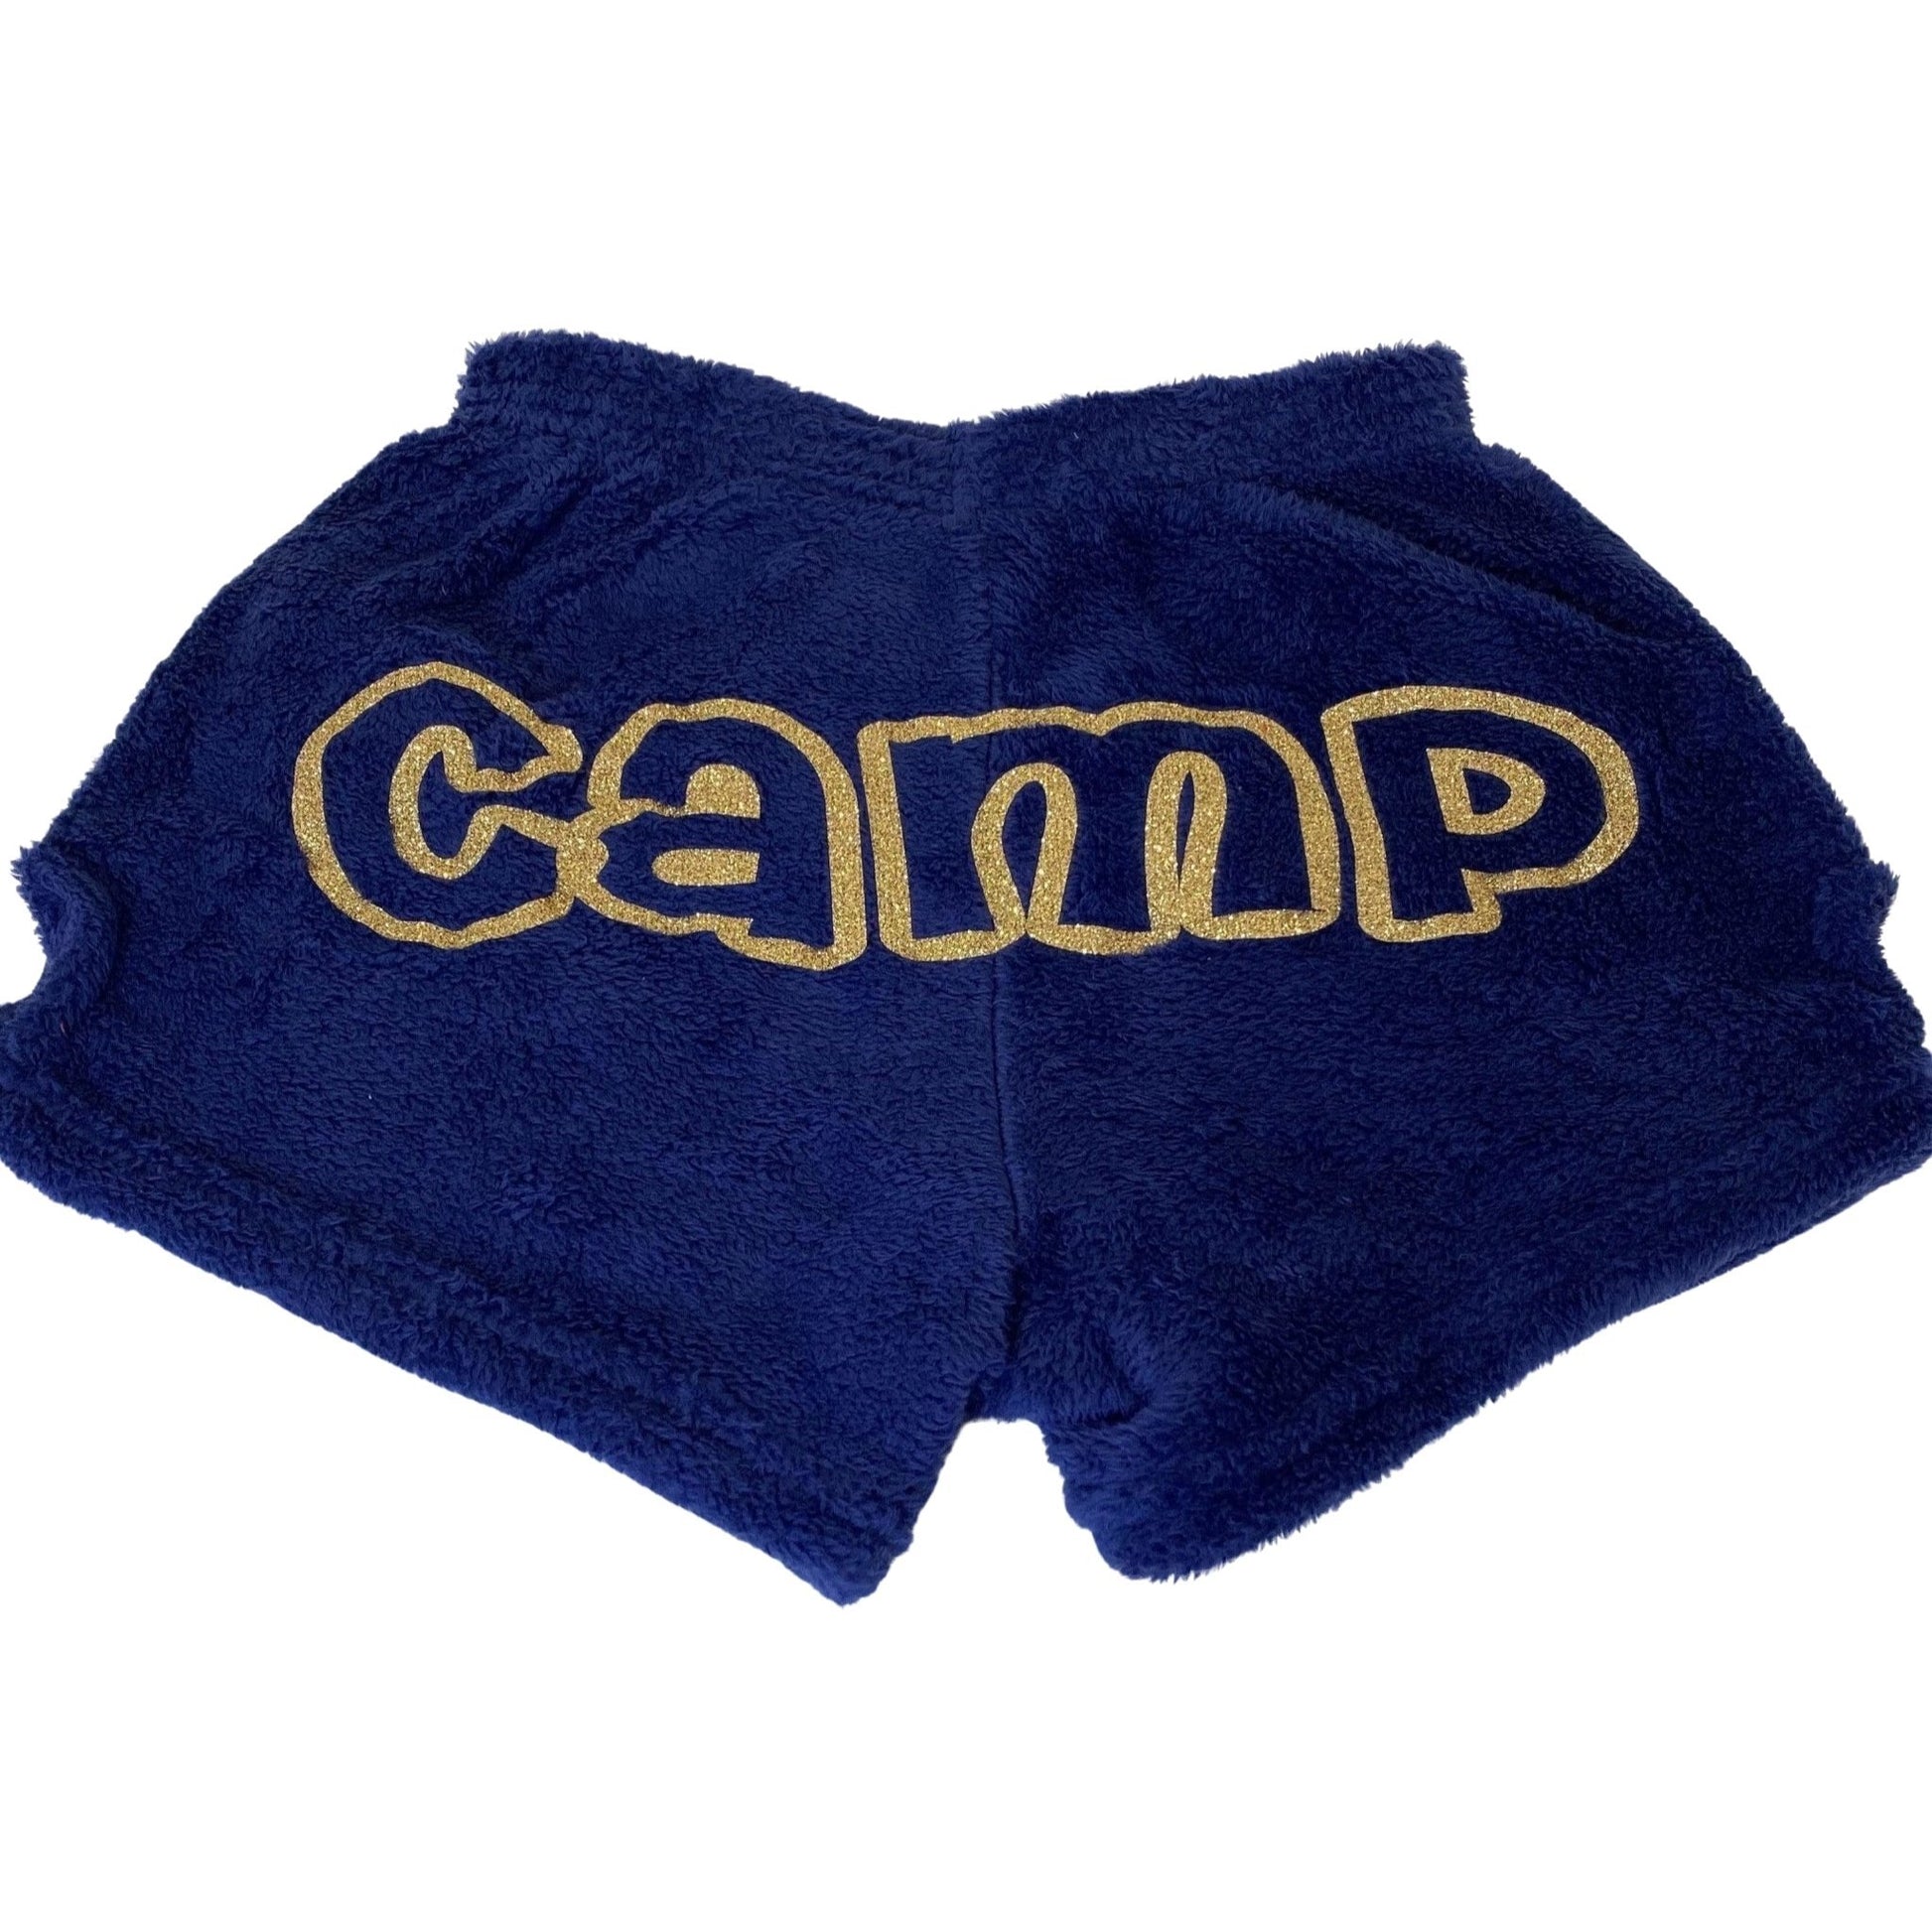 Made with Love Fuzzy Plush Custom Camp Shorts - a Spirit Animal -